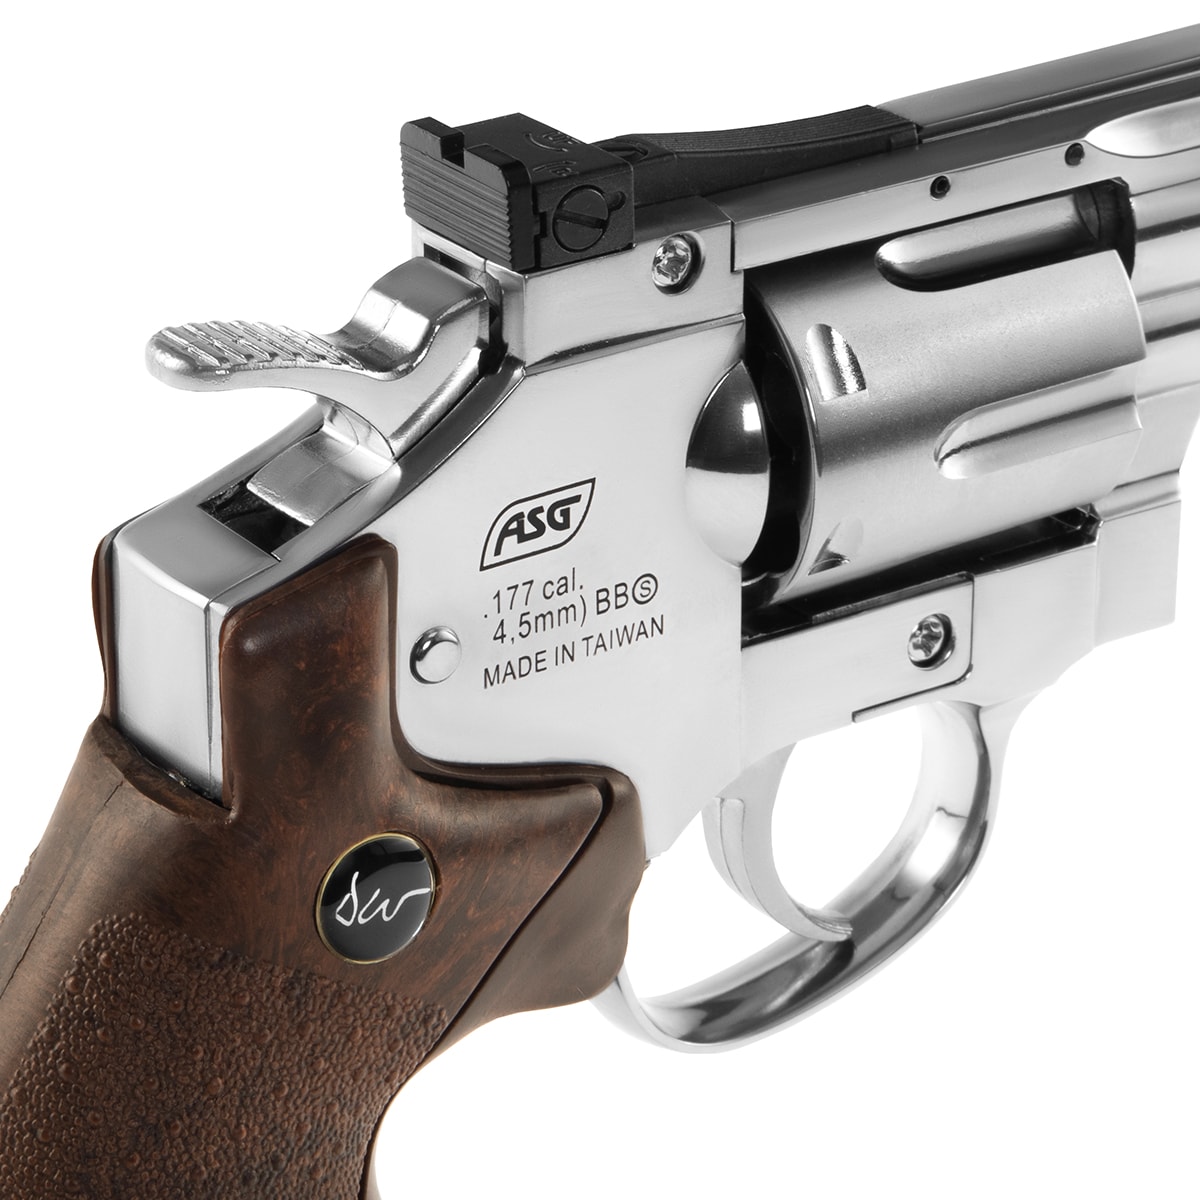 Револьвер Dan Wesson 8'' BB 4,5 мм Silver